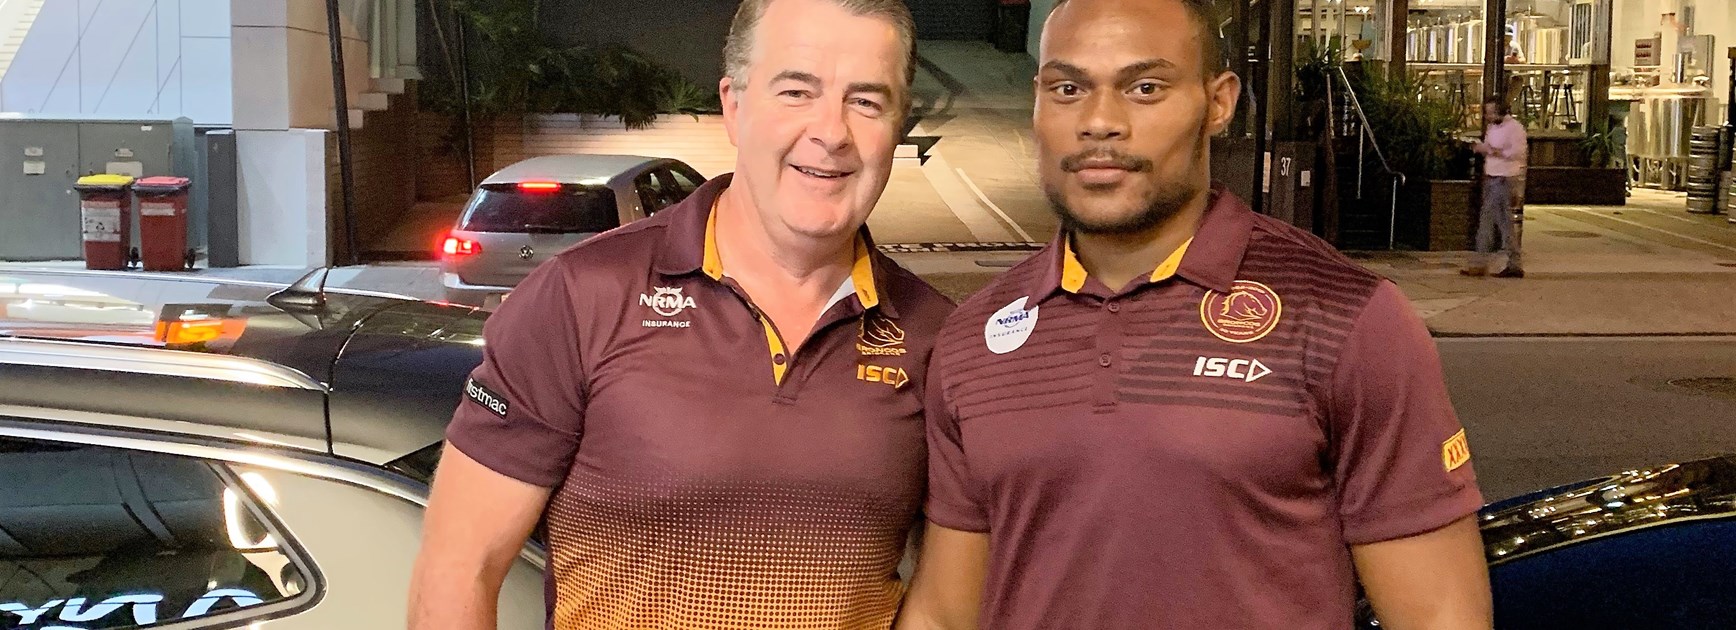 Brisbane's Fijian recruit Vudogo following Radradra path